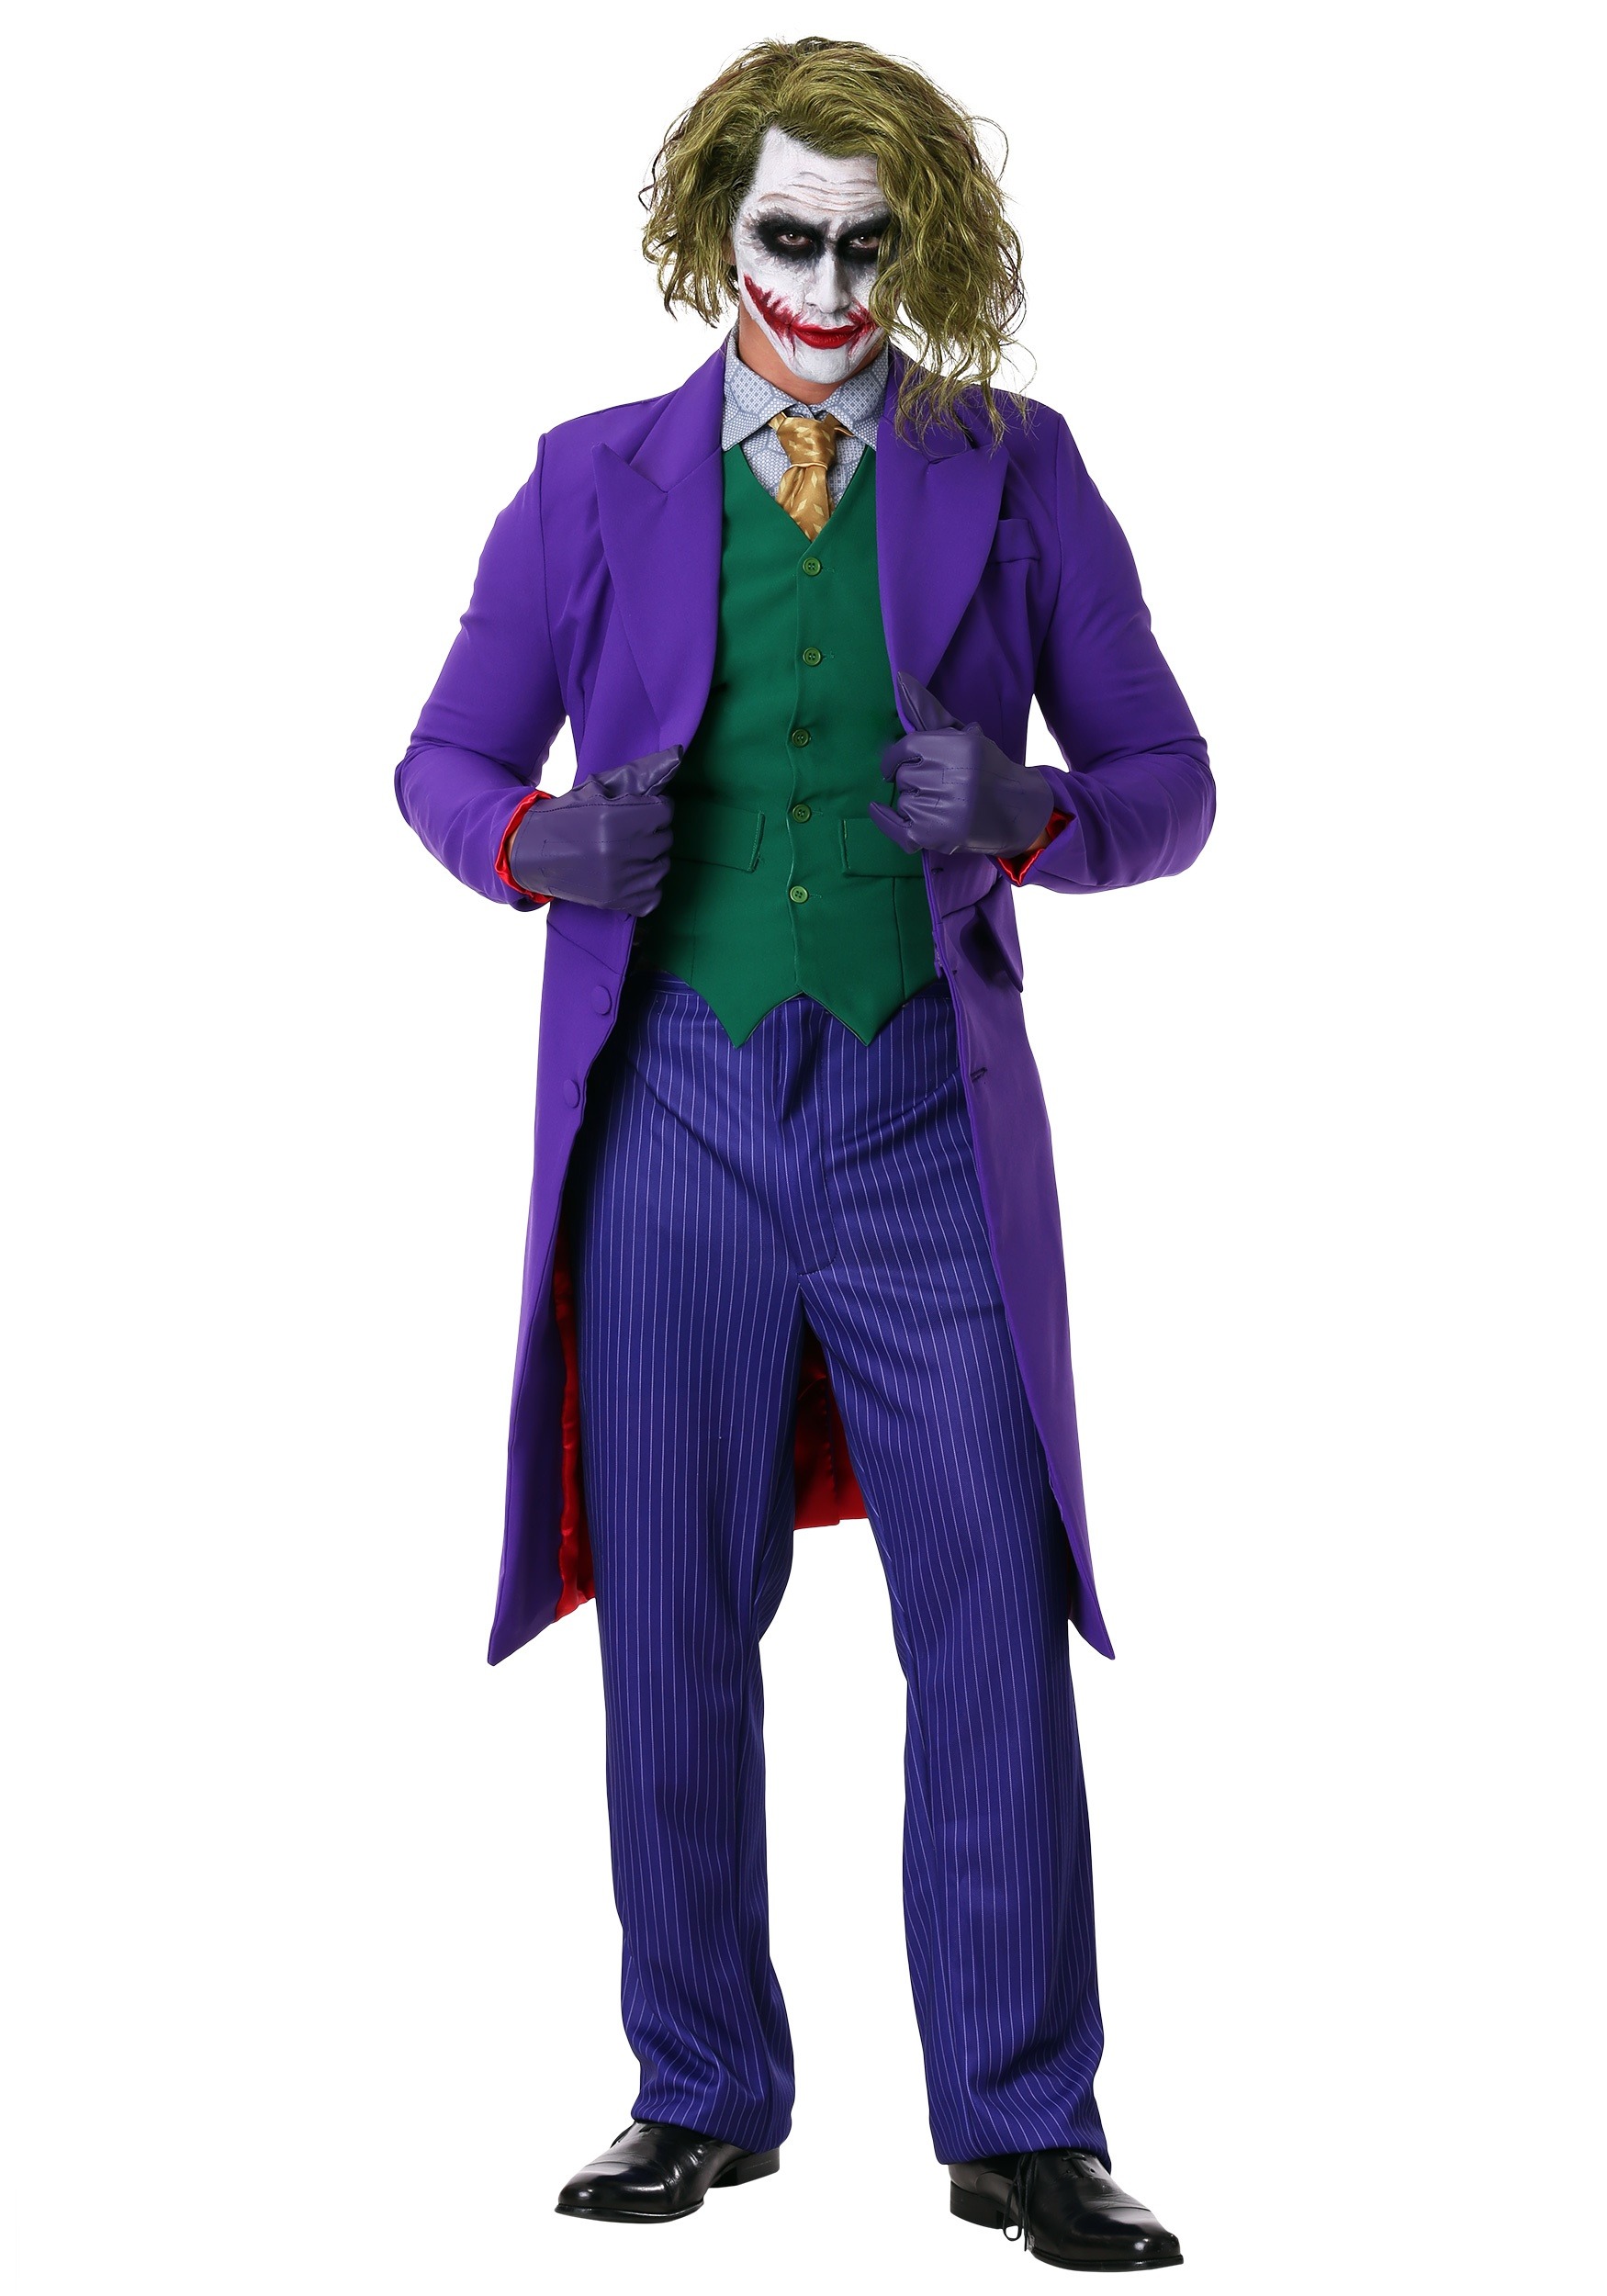 Image of Grand Heritage Joker Costume - Adult Dark Knight Joker Costumes ID RU56215-L